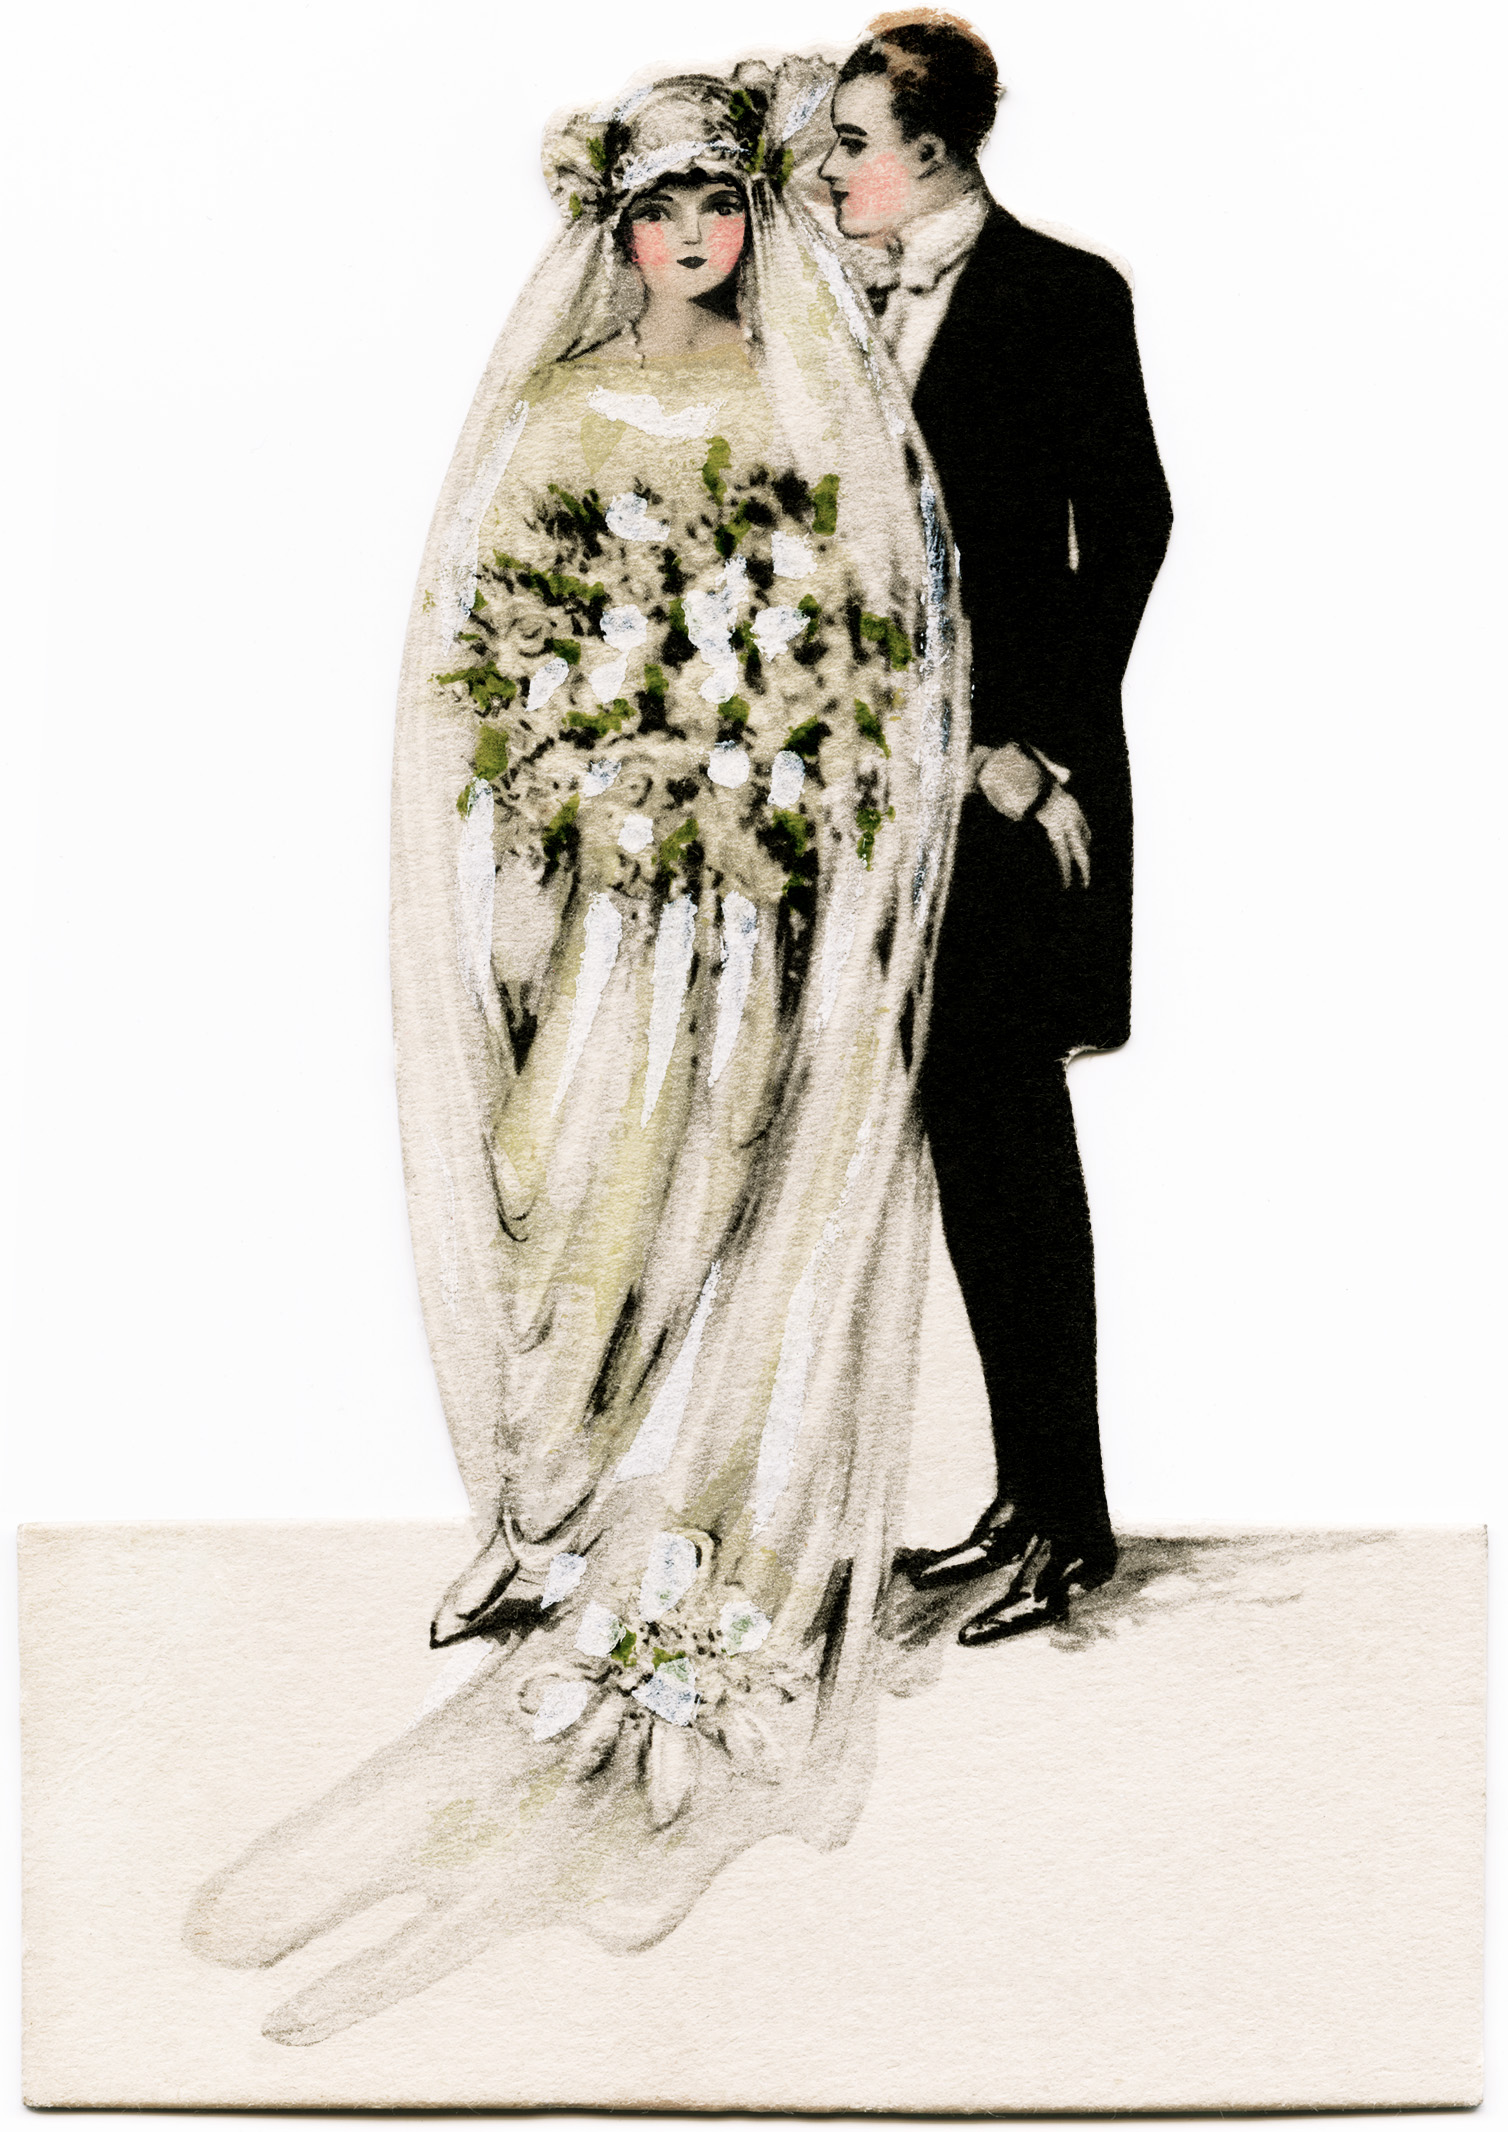 Victorian bride and groom, vintage wedding clipart, antique wedding graphics, printable bride groom Click on image to enlarge.